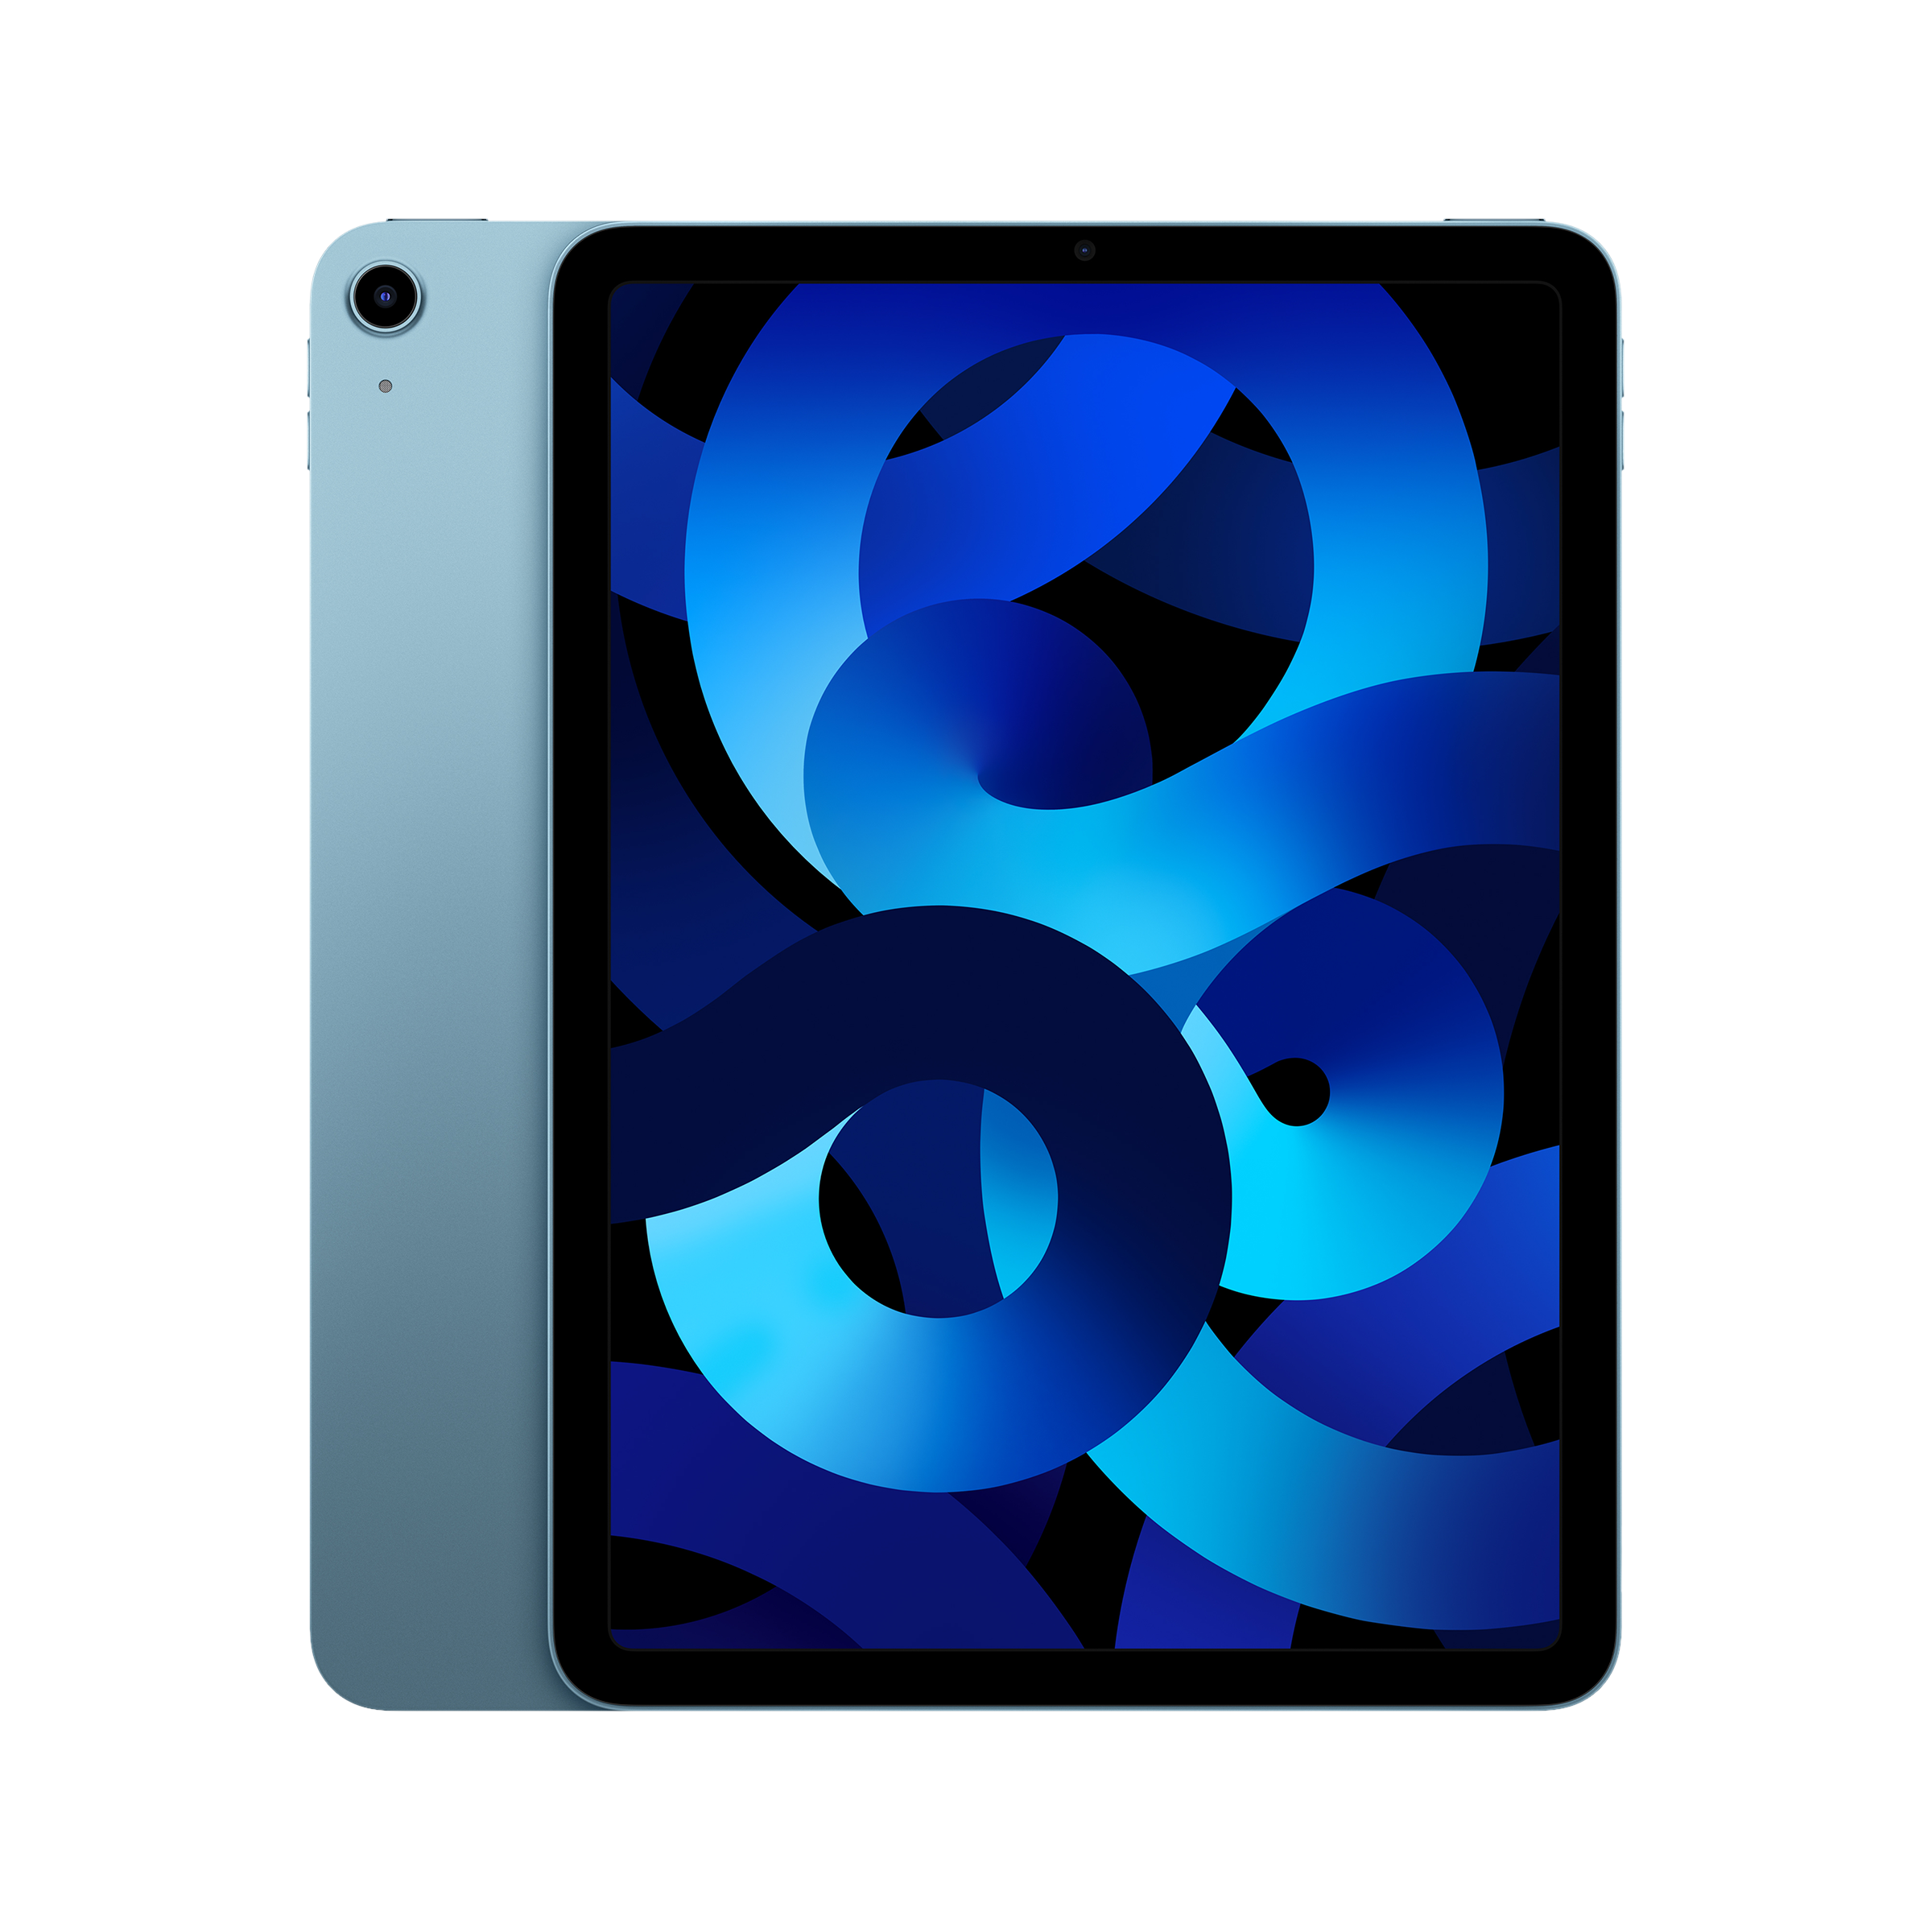 Is the Apple iPad Mini worth buying in February 2023?